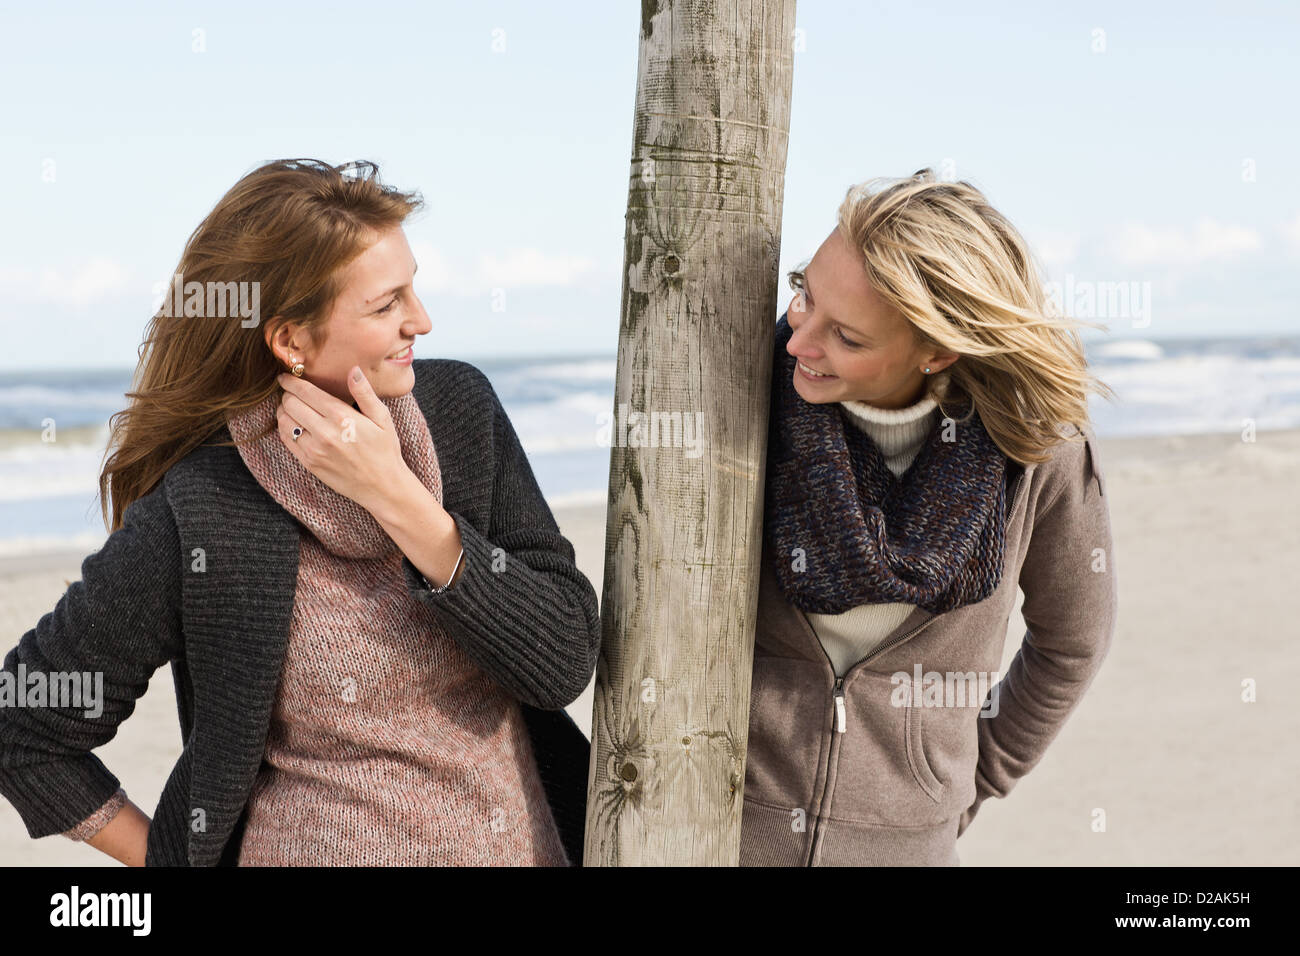 Smiling women talking on beach Stock Photo